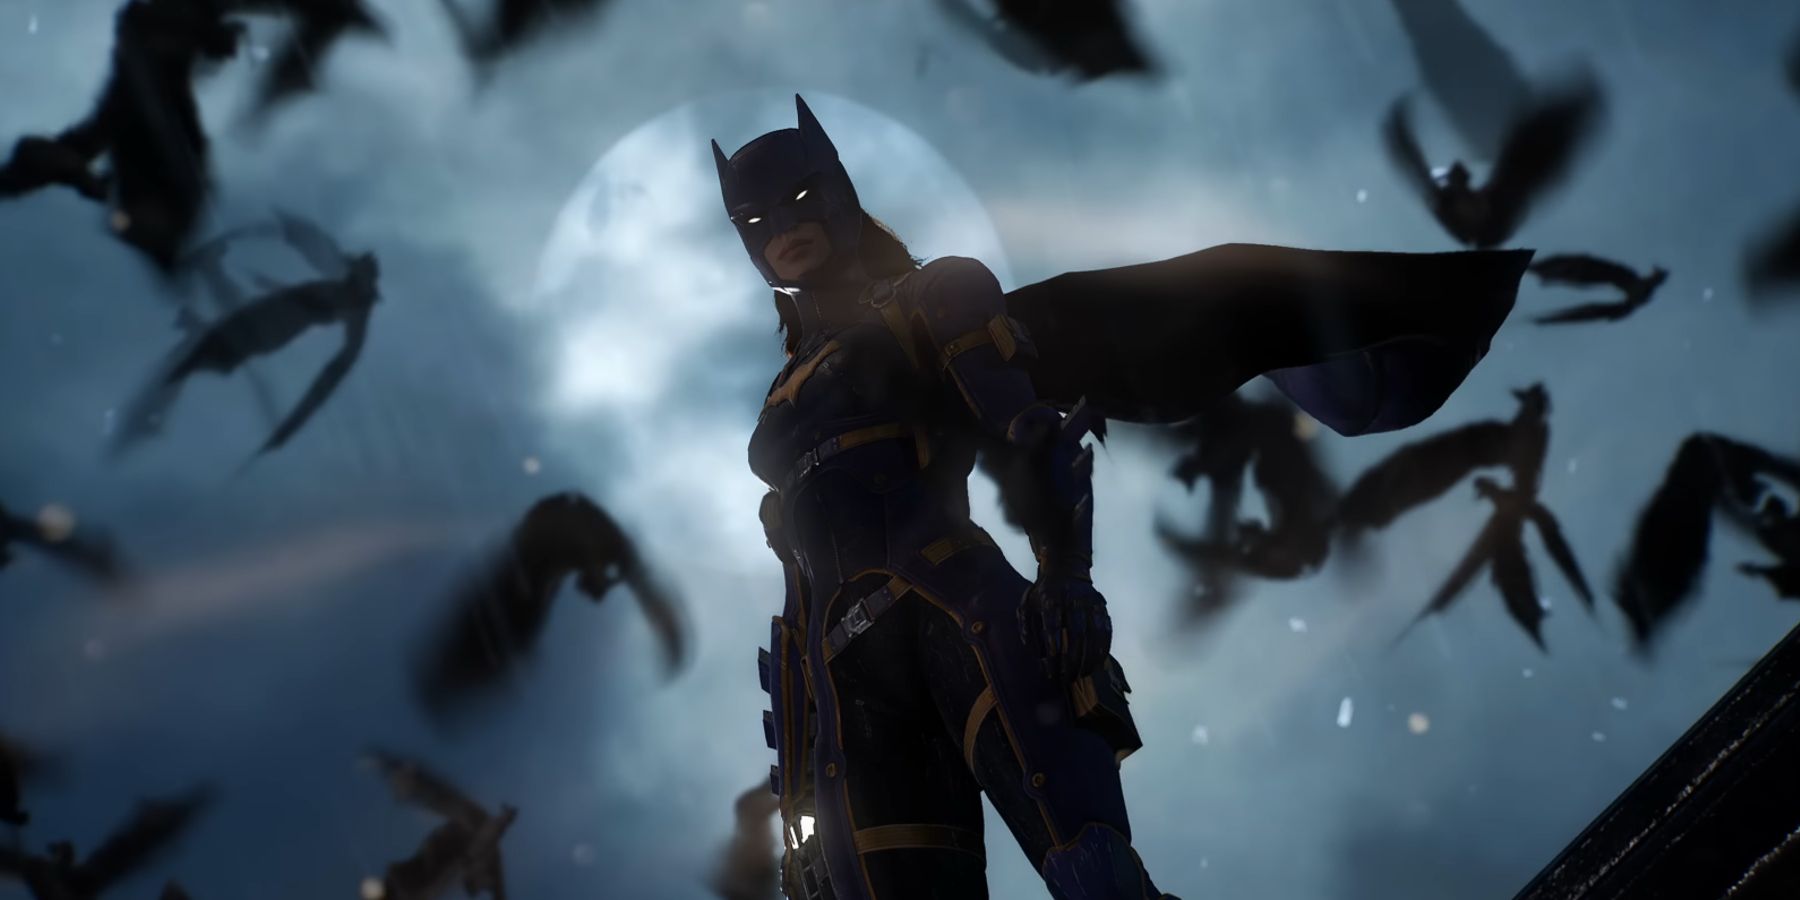 batgirl gotham knights character spotlight trailer gameplay cape glide